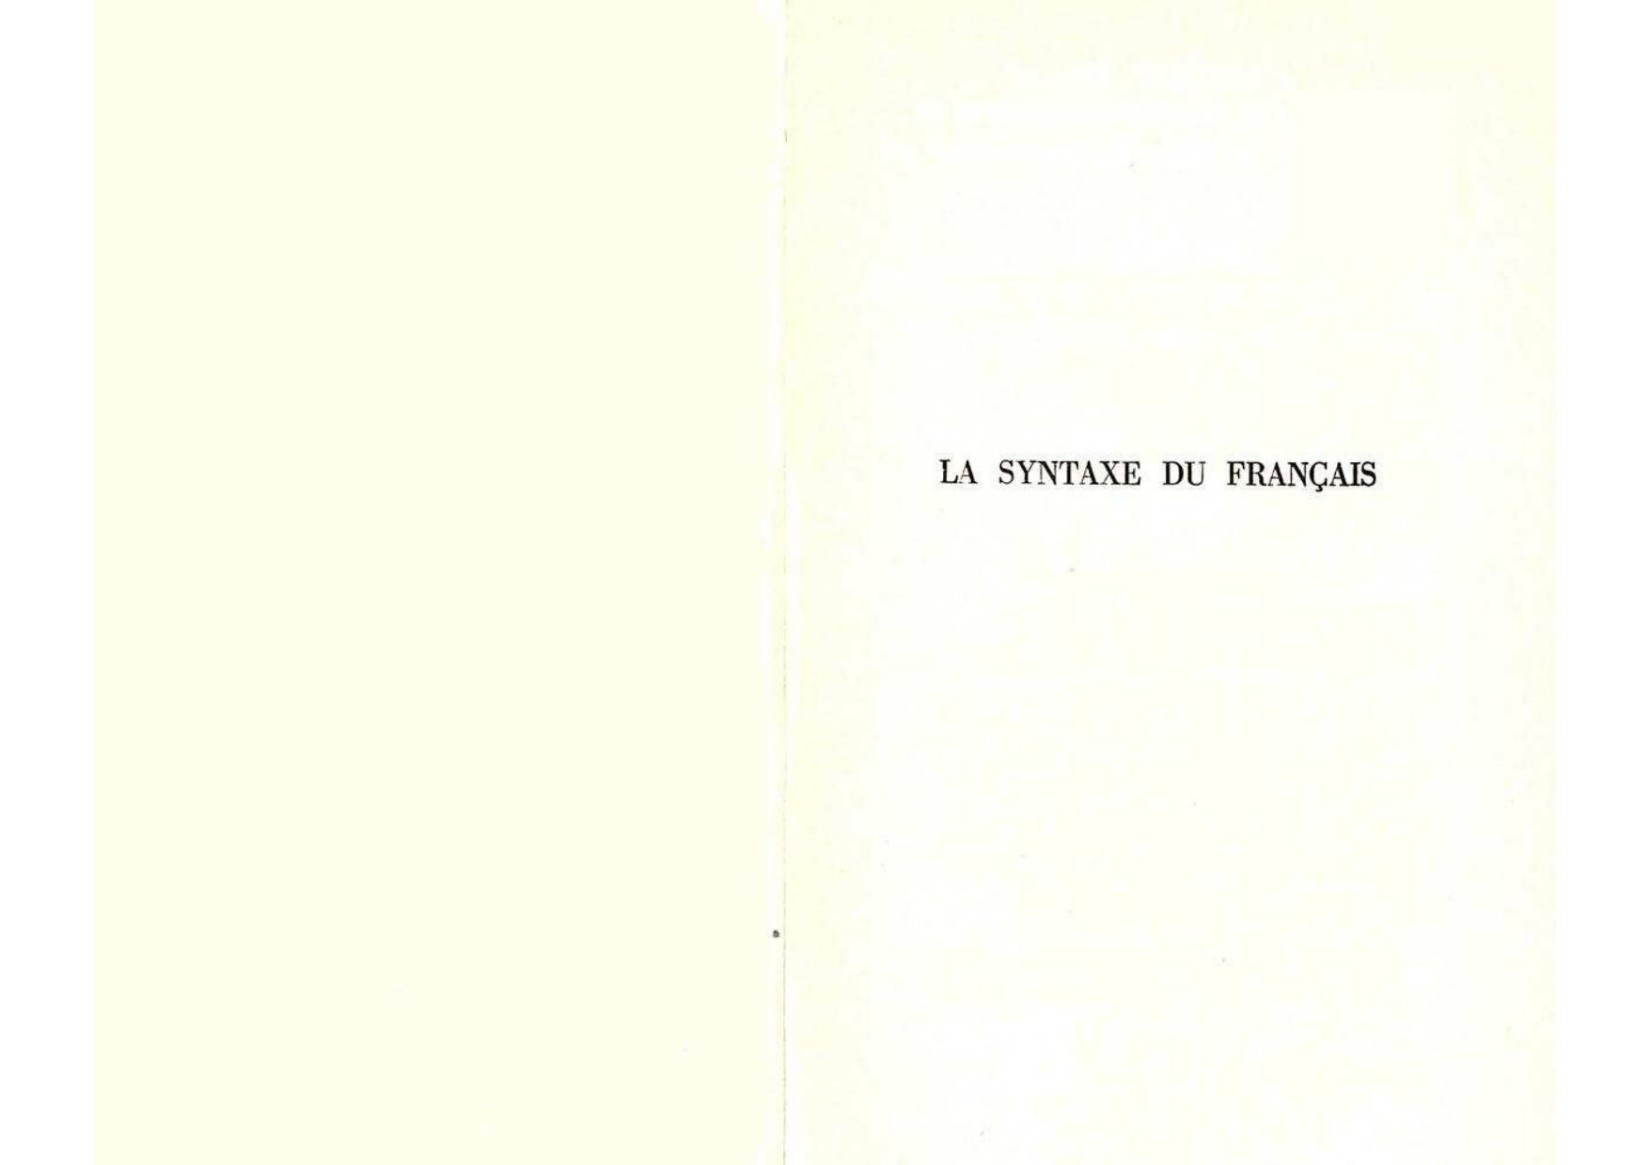 La Syntaxe du français 1967